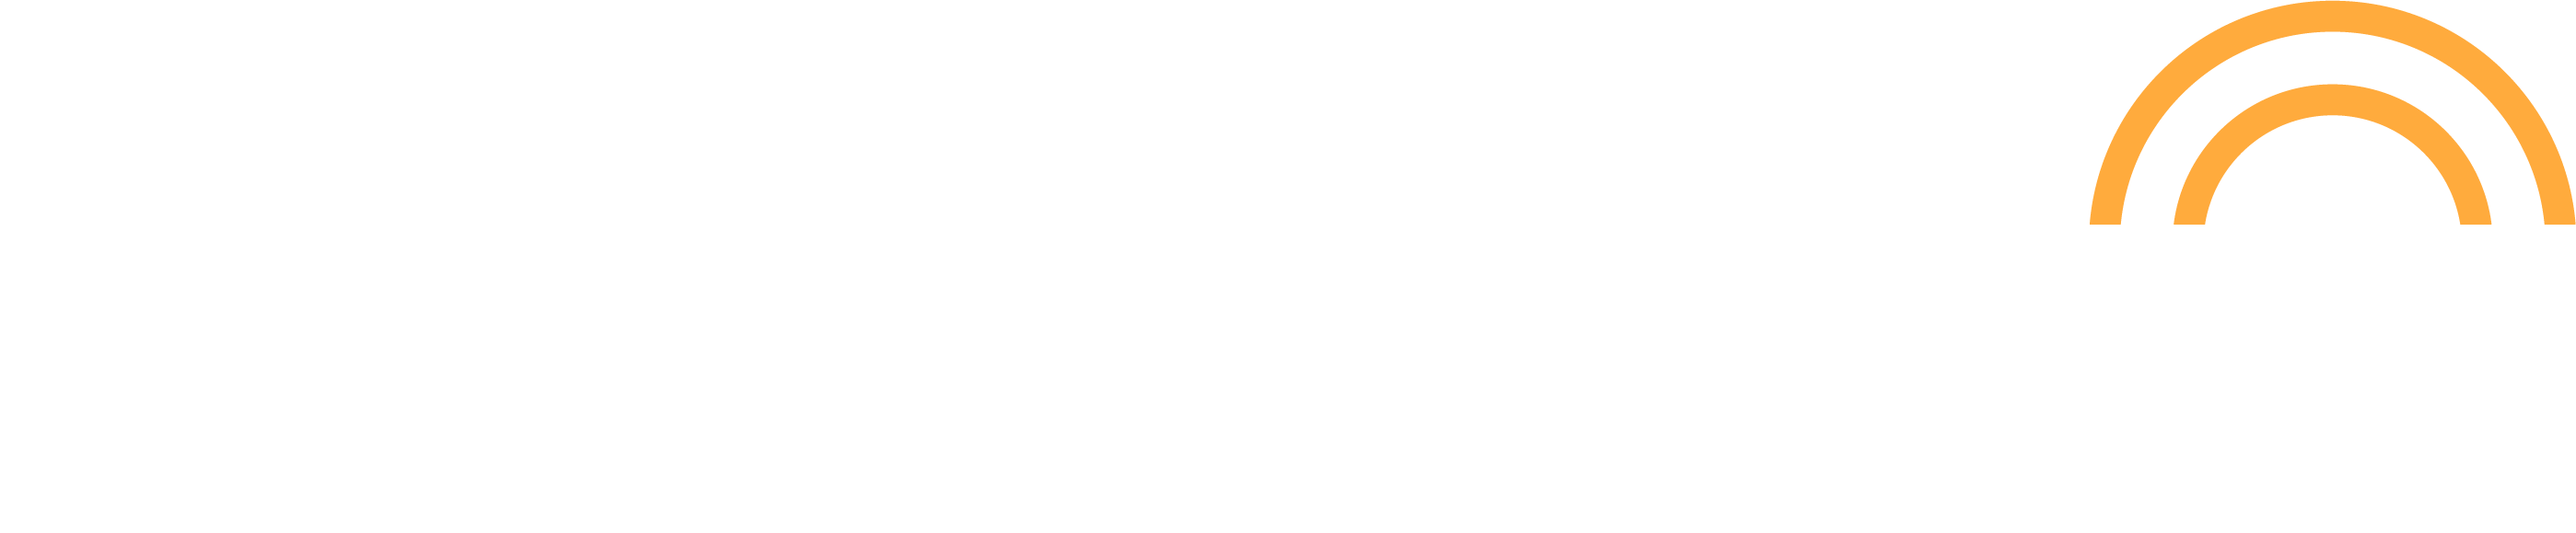 Connecten Internet logo